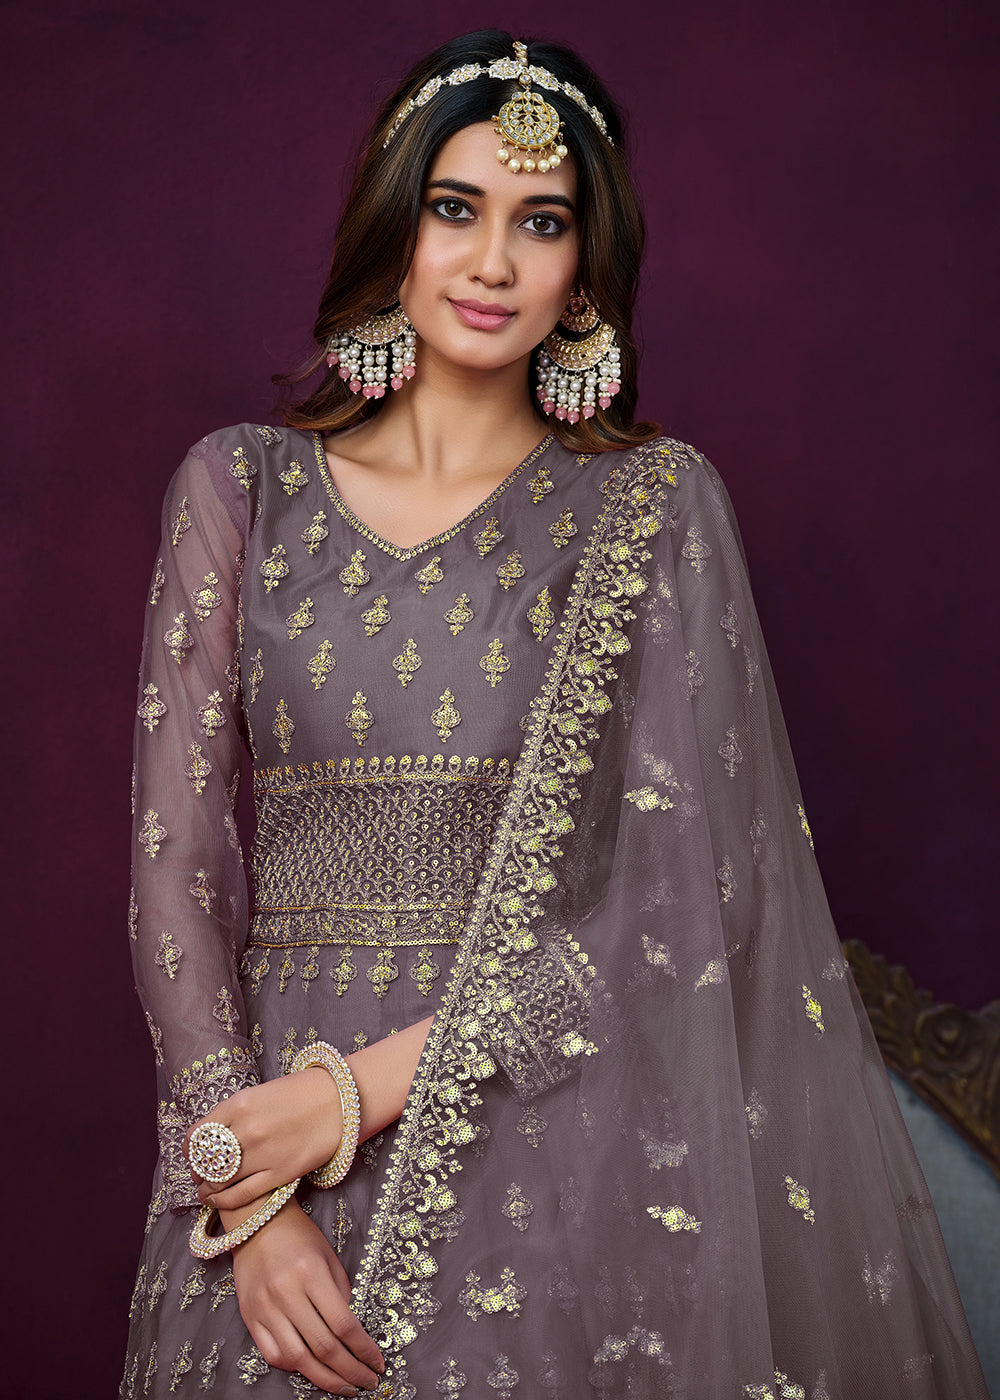 Buy Now Floor Length Purple Sequins Embroidered Wedding Anarkali Suit Online in USA, UK, Australia, New Zealand, Canada & Worldwide at Empress Clothing. 